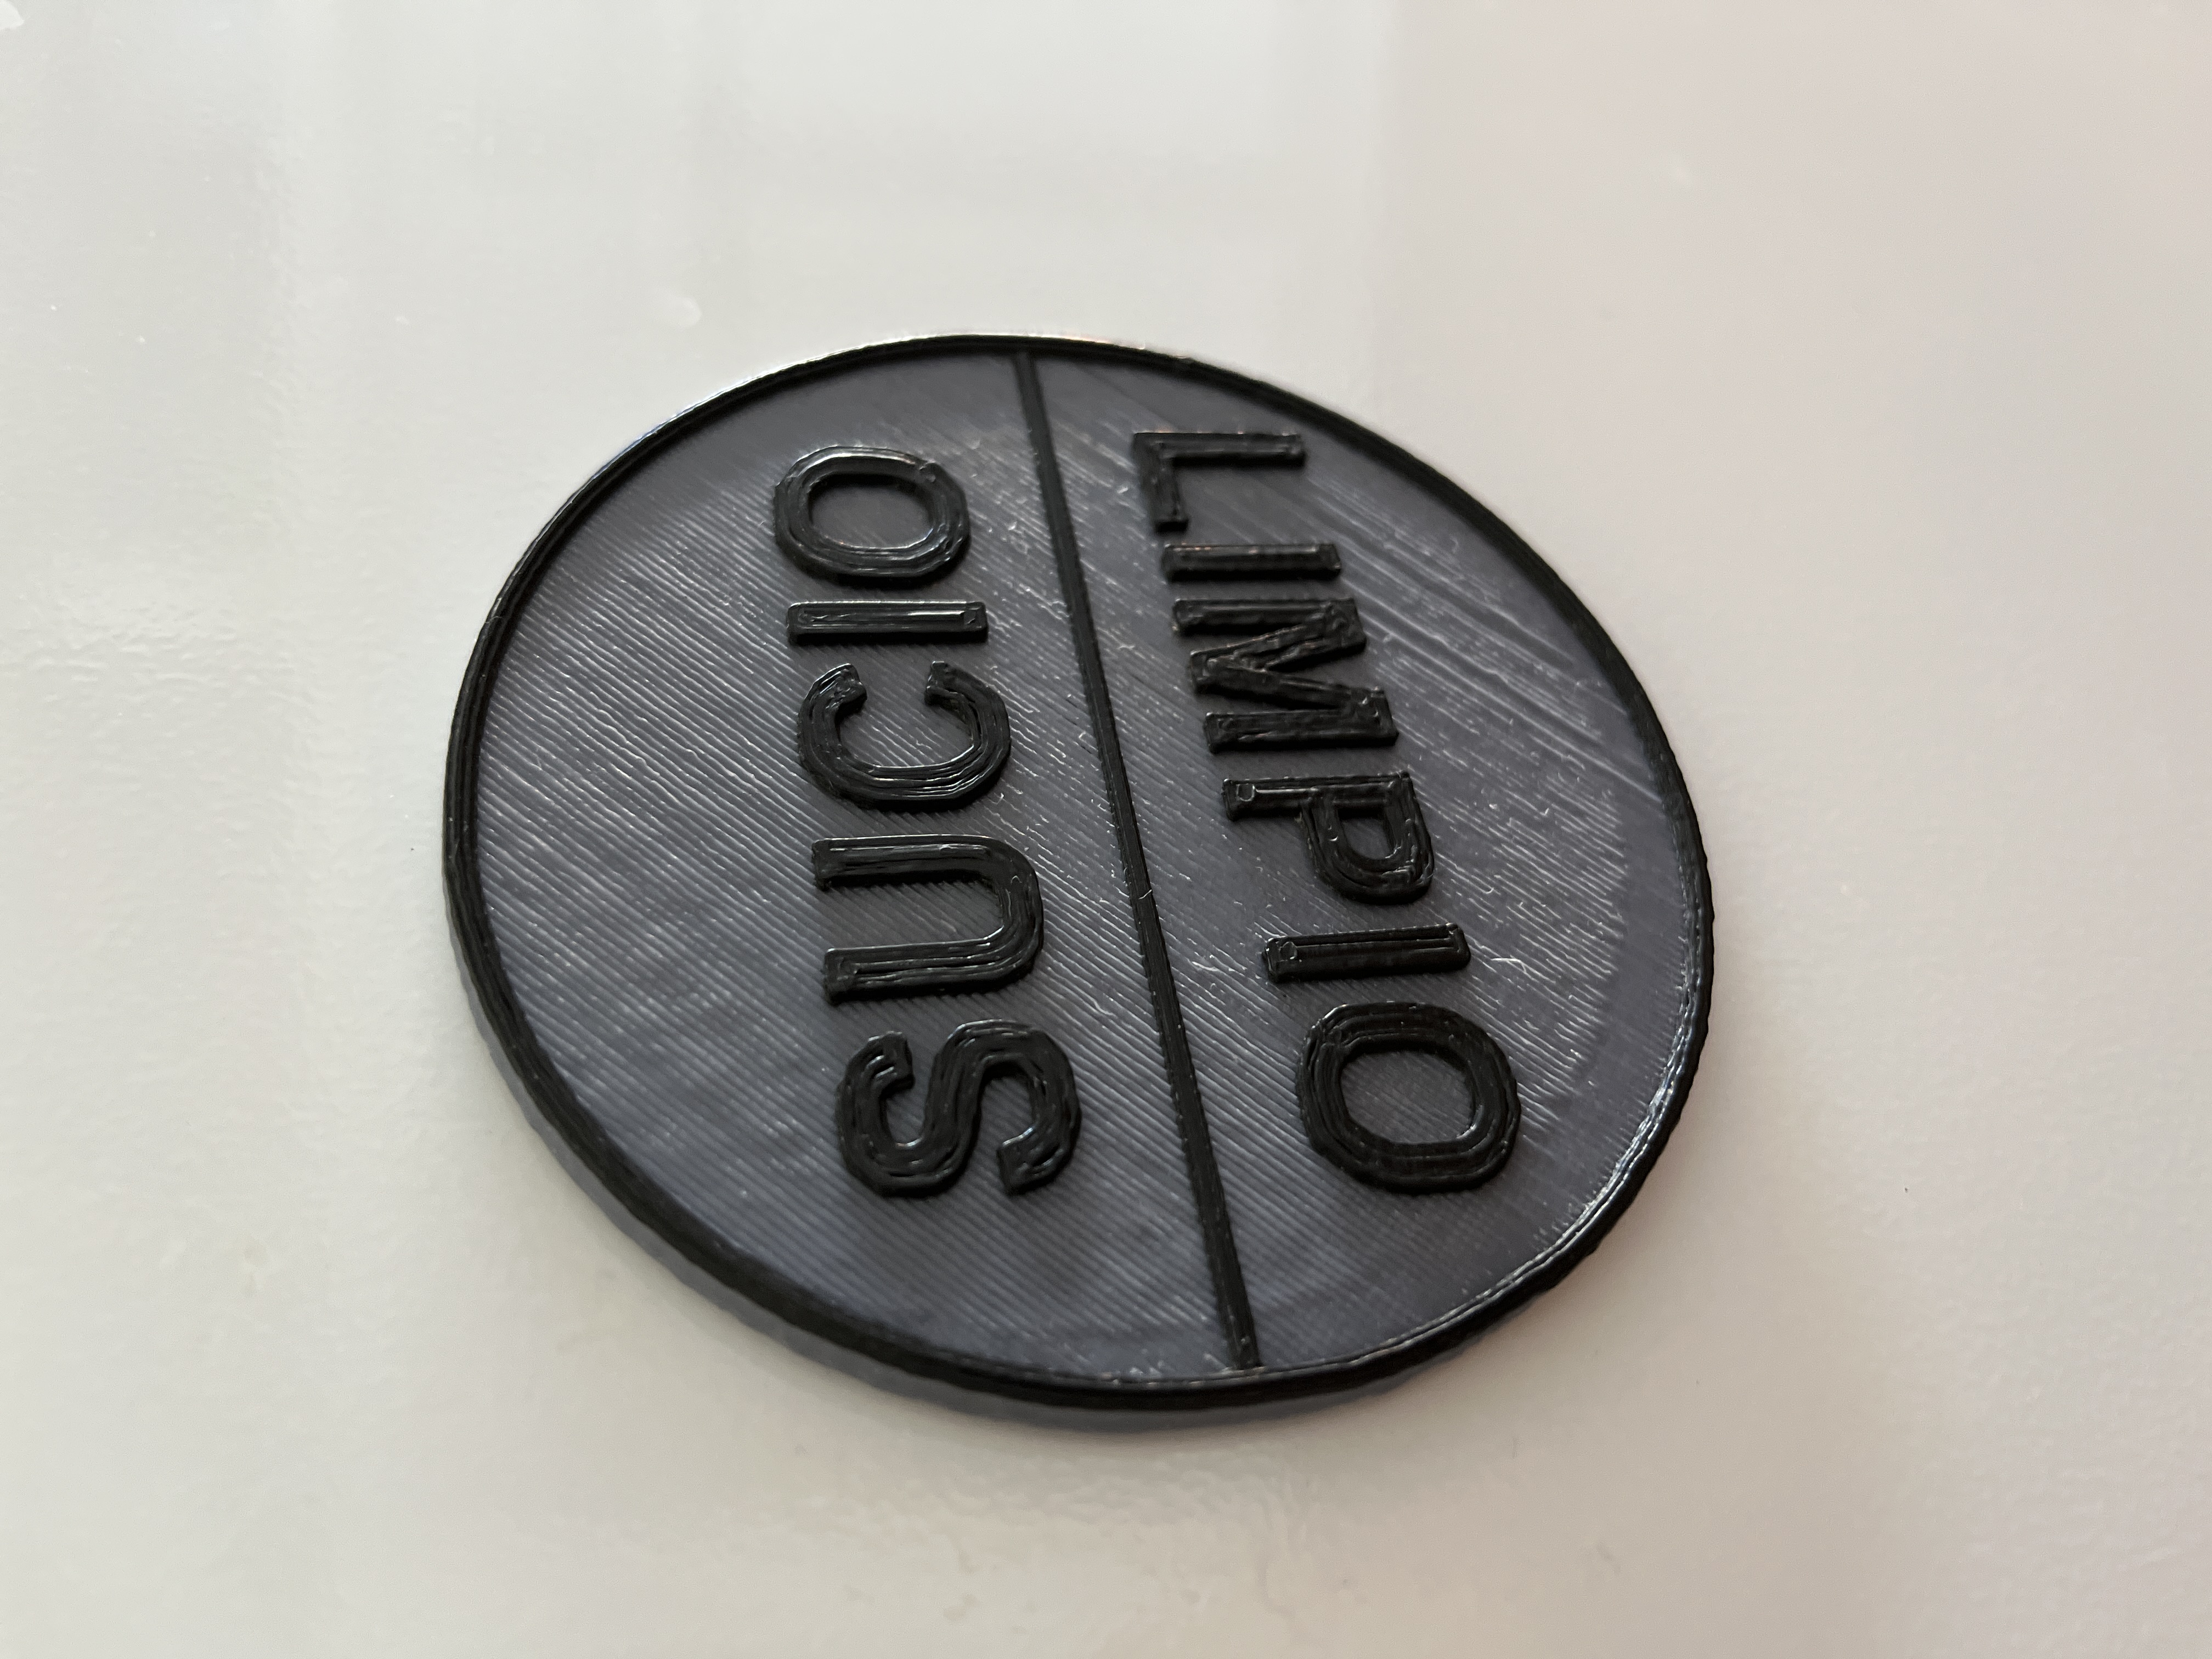 Limpio - Sucio Dishwasher Magnet (Clean - Dirty in Spanish)